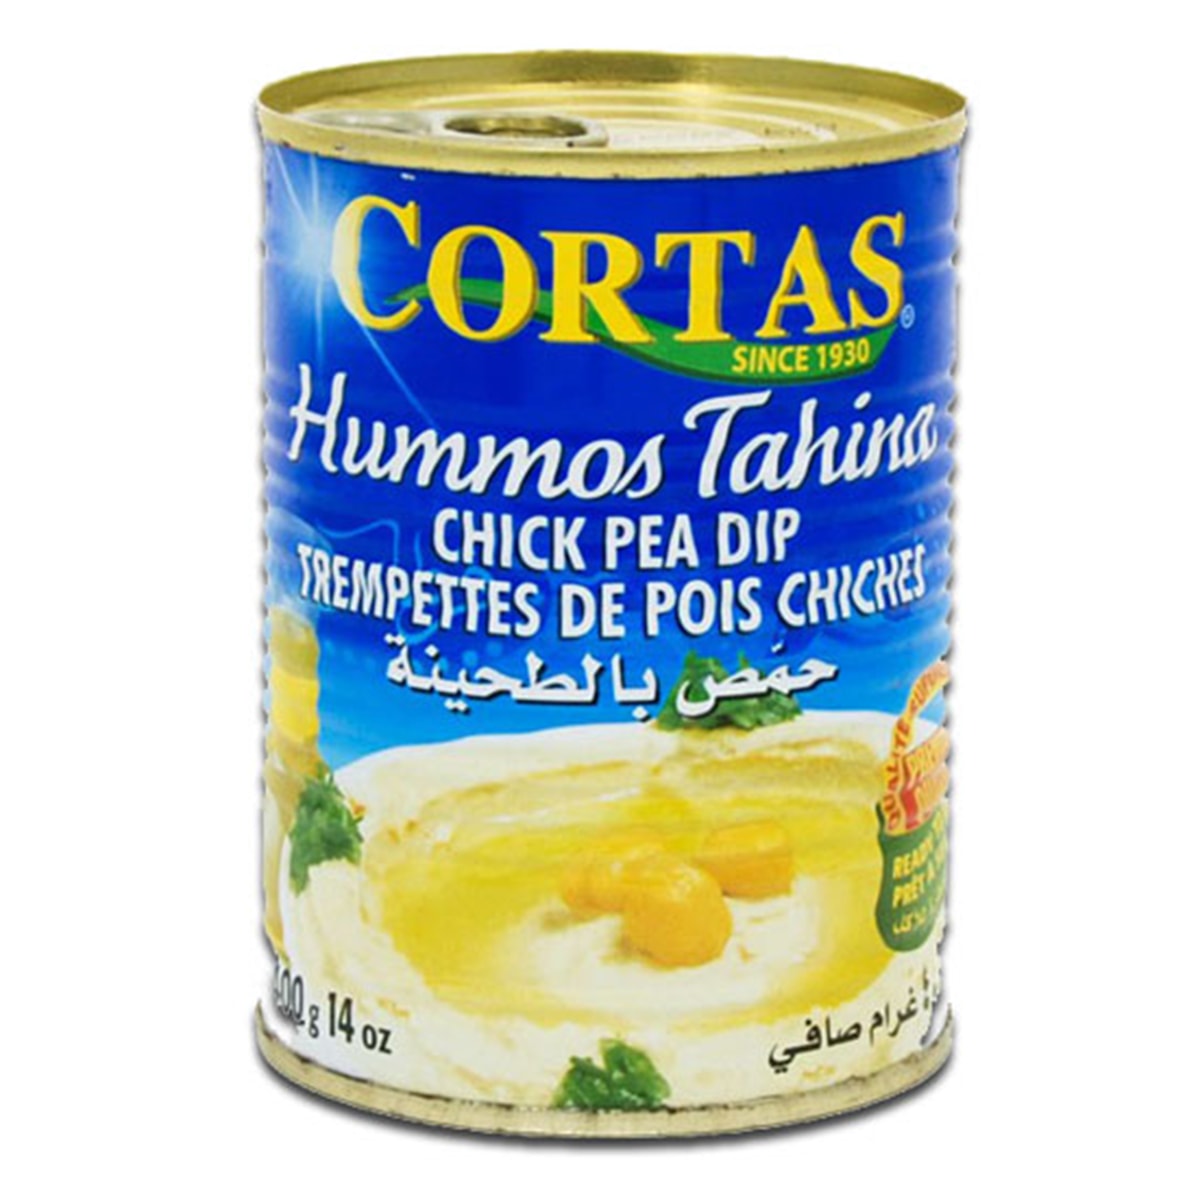 Buy Cortas Hummos Tahini (Chick Pea Dip) Ready to Serve - 400 gm